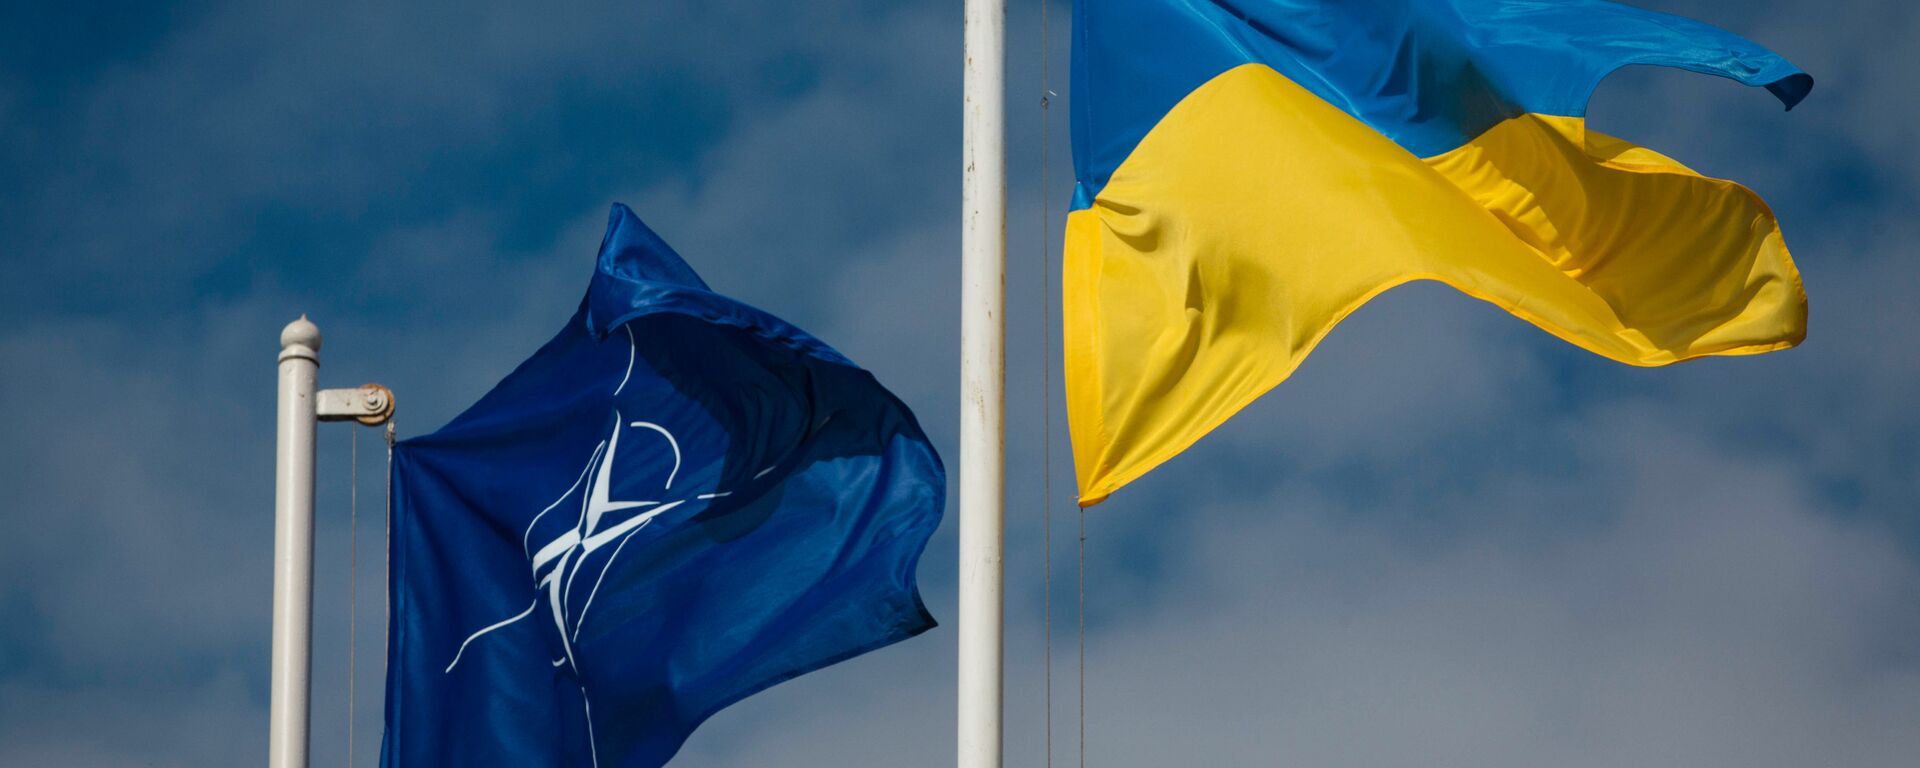 National flag of Ukraine and the NATO flag - Sputnik International, 1920, 08.06.2021